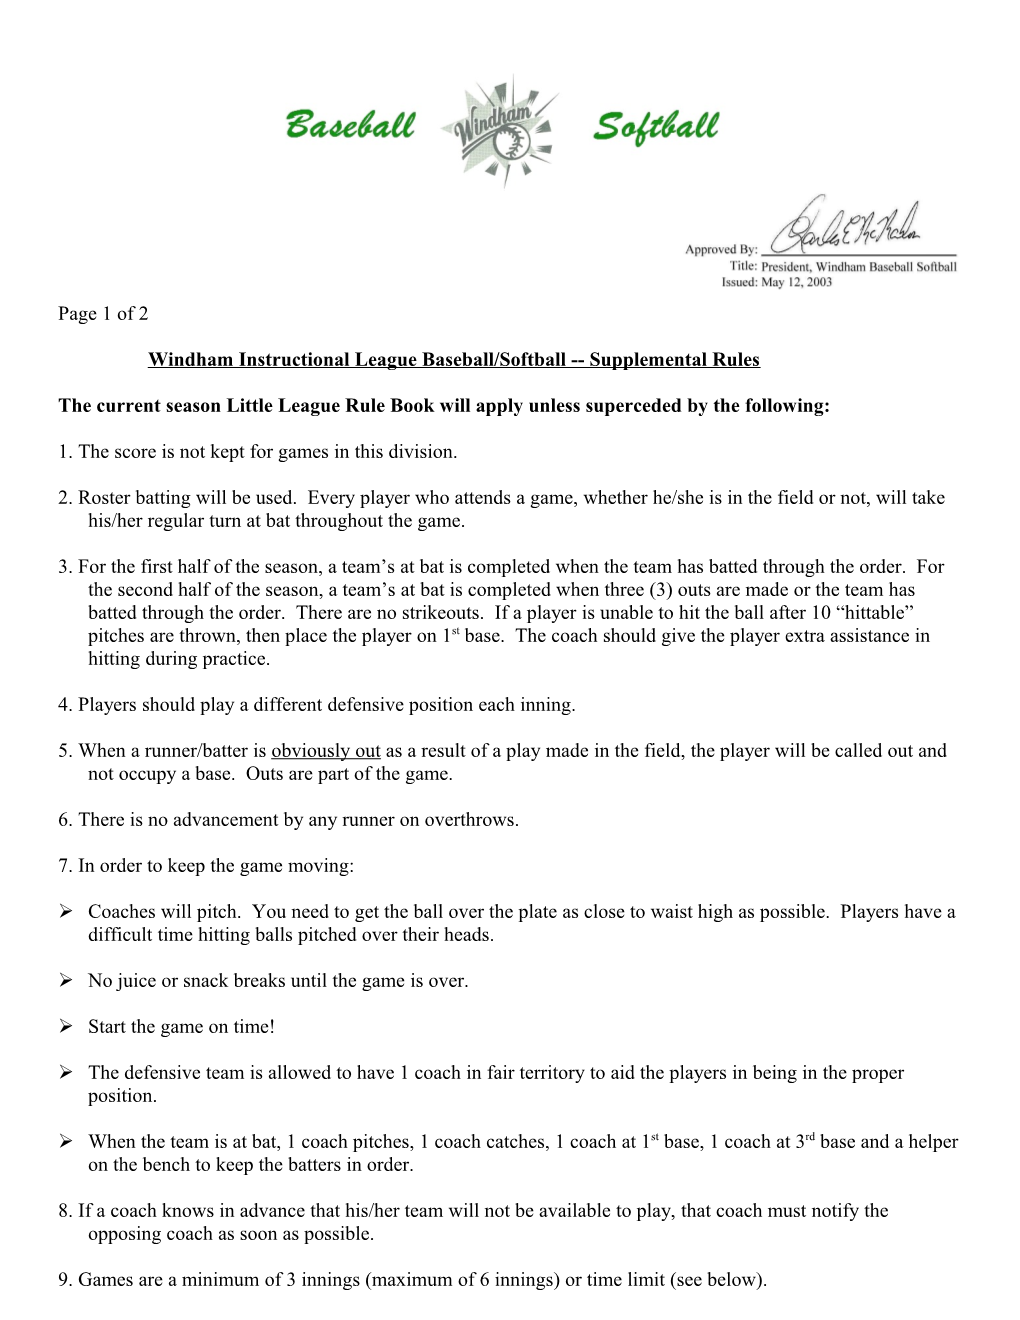 Windham Instructional League Baseball/Softball Supplemental Rules